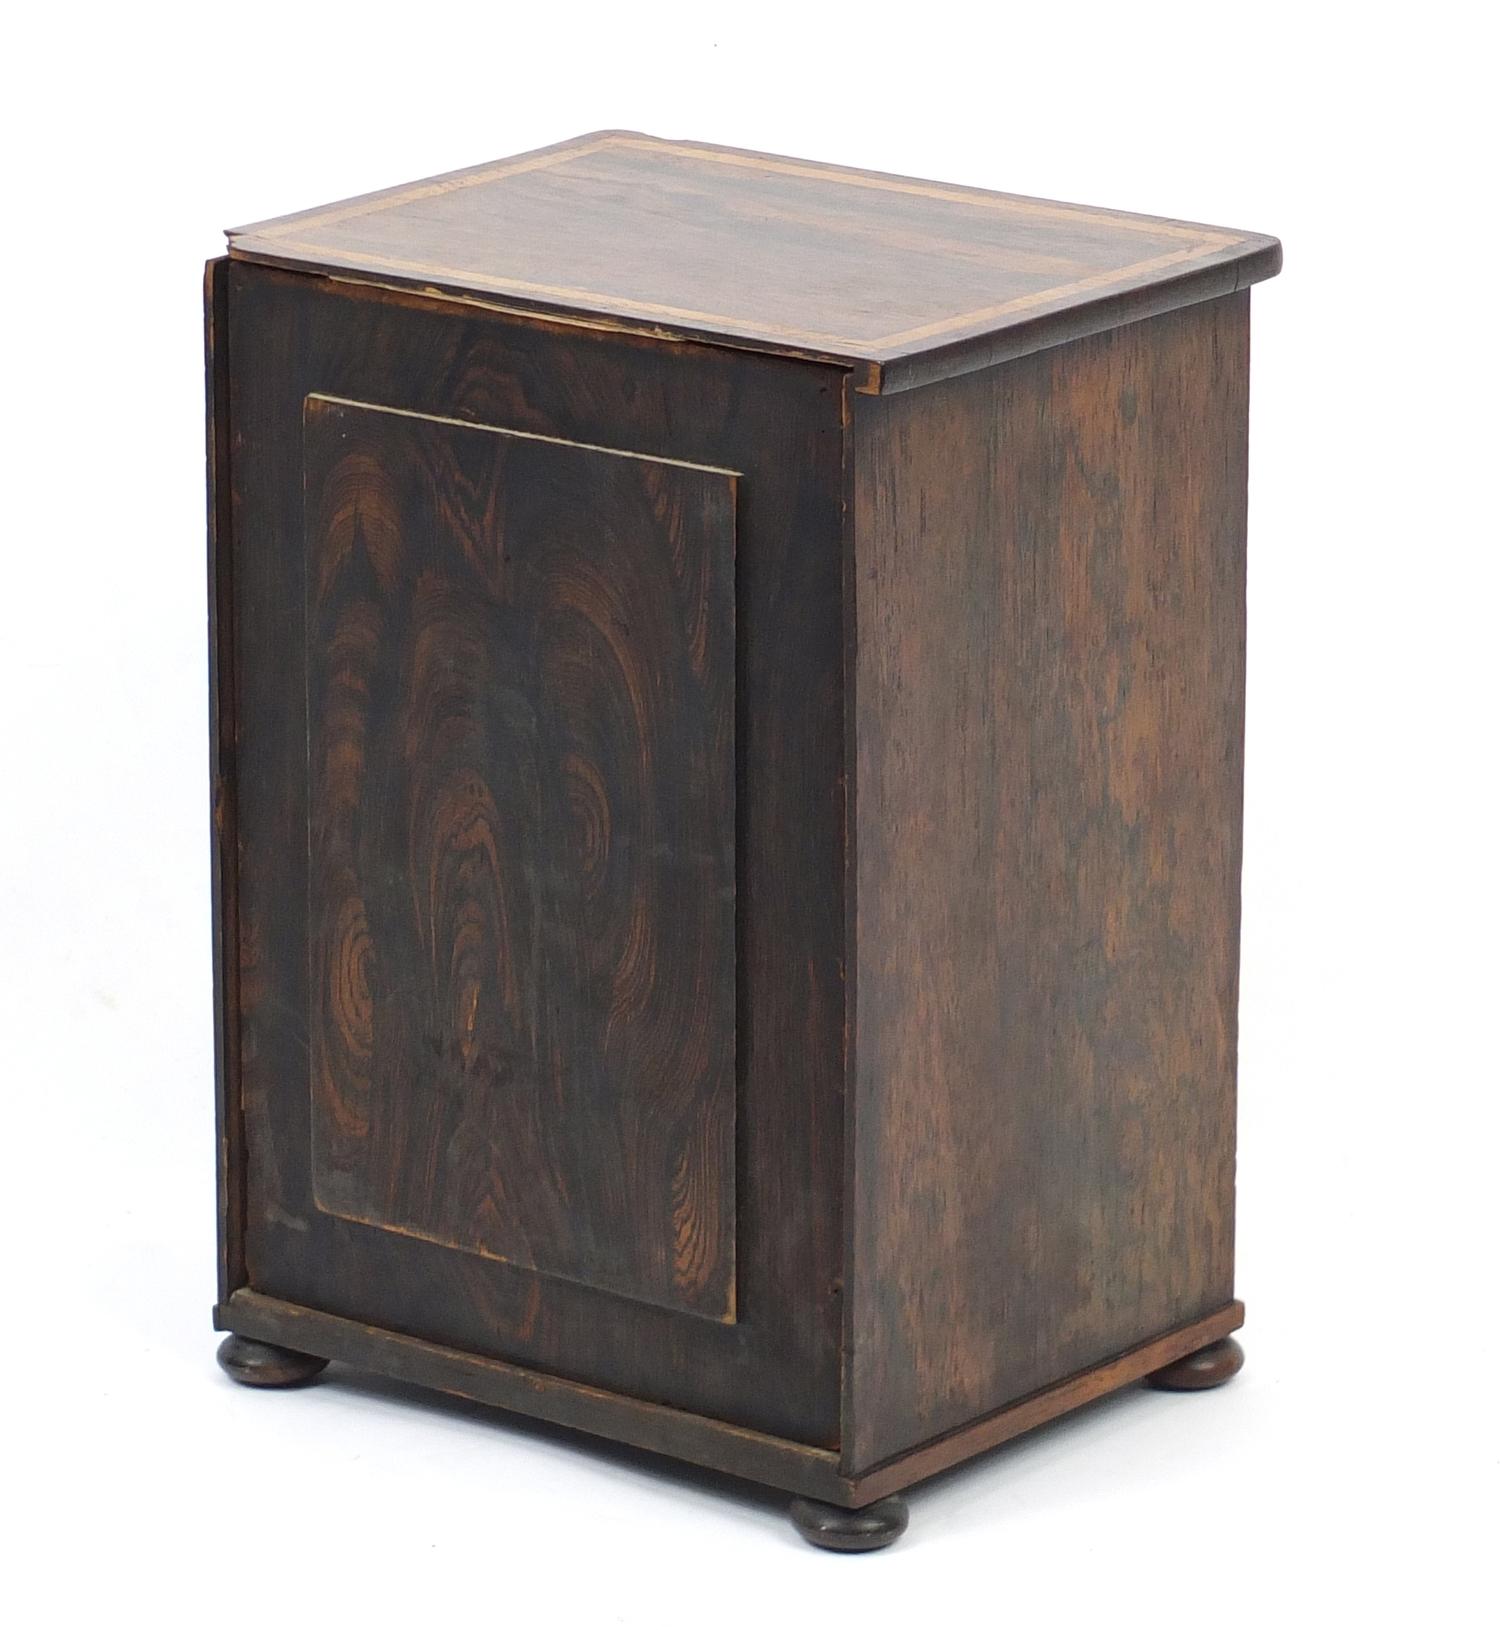 Victorian rosewood five drawer apprentice chest with oak inlay, 37.5cm H x 27.5cm W x 21cm D :For - Image 4 of 5